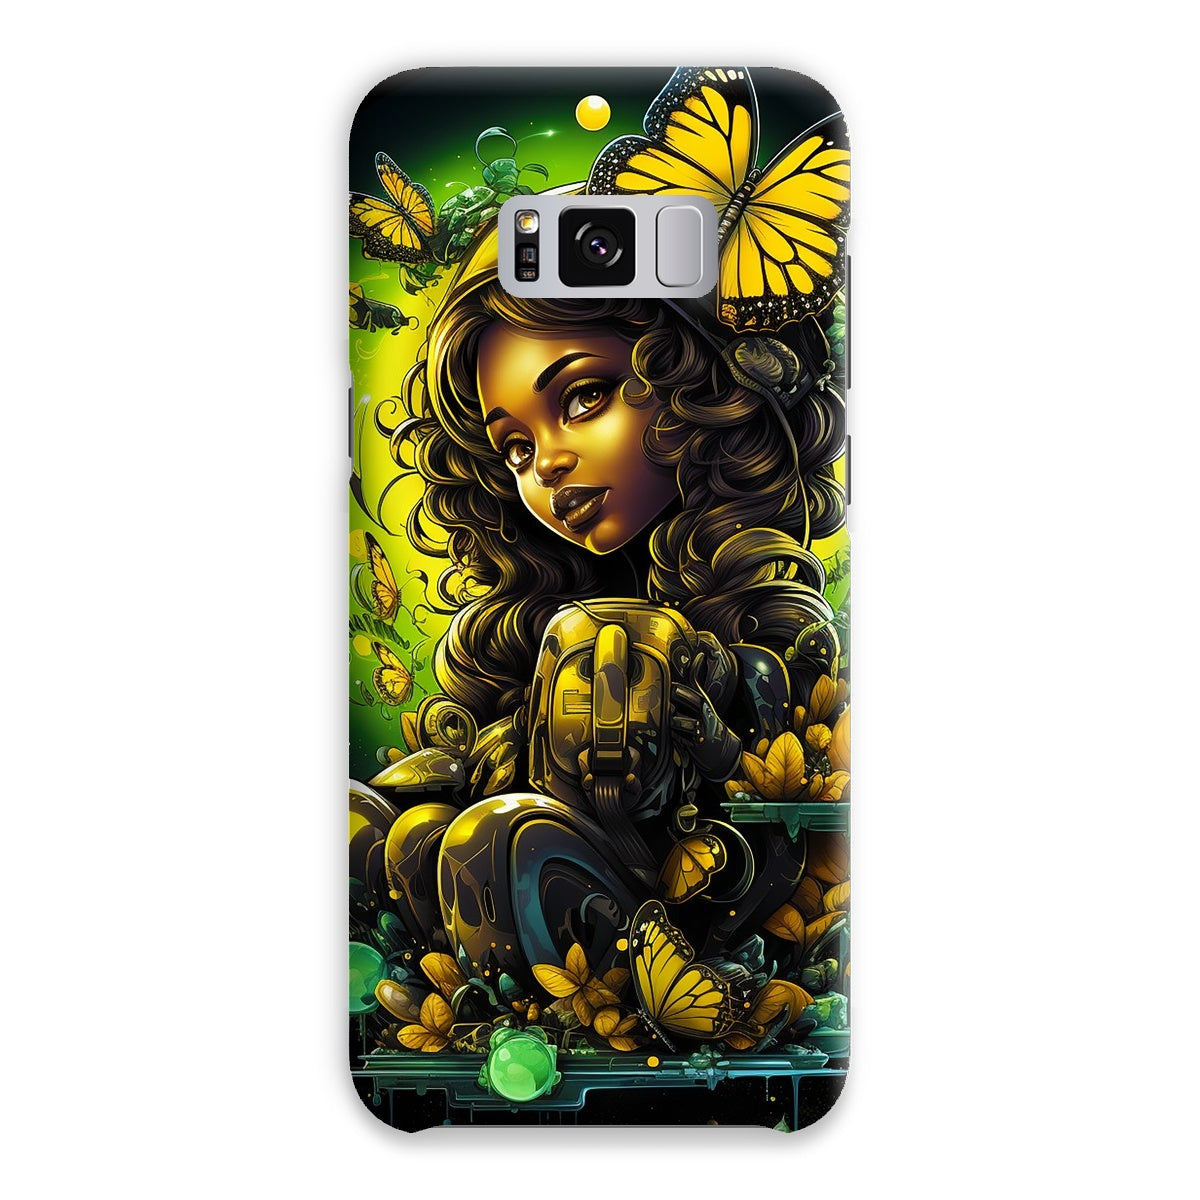 Urban Jungle Metamorphosis Muse Luminous Butterfly Queen Snap Phone Case